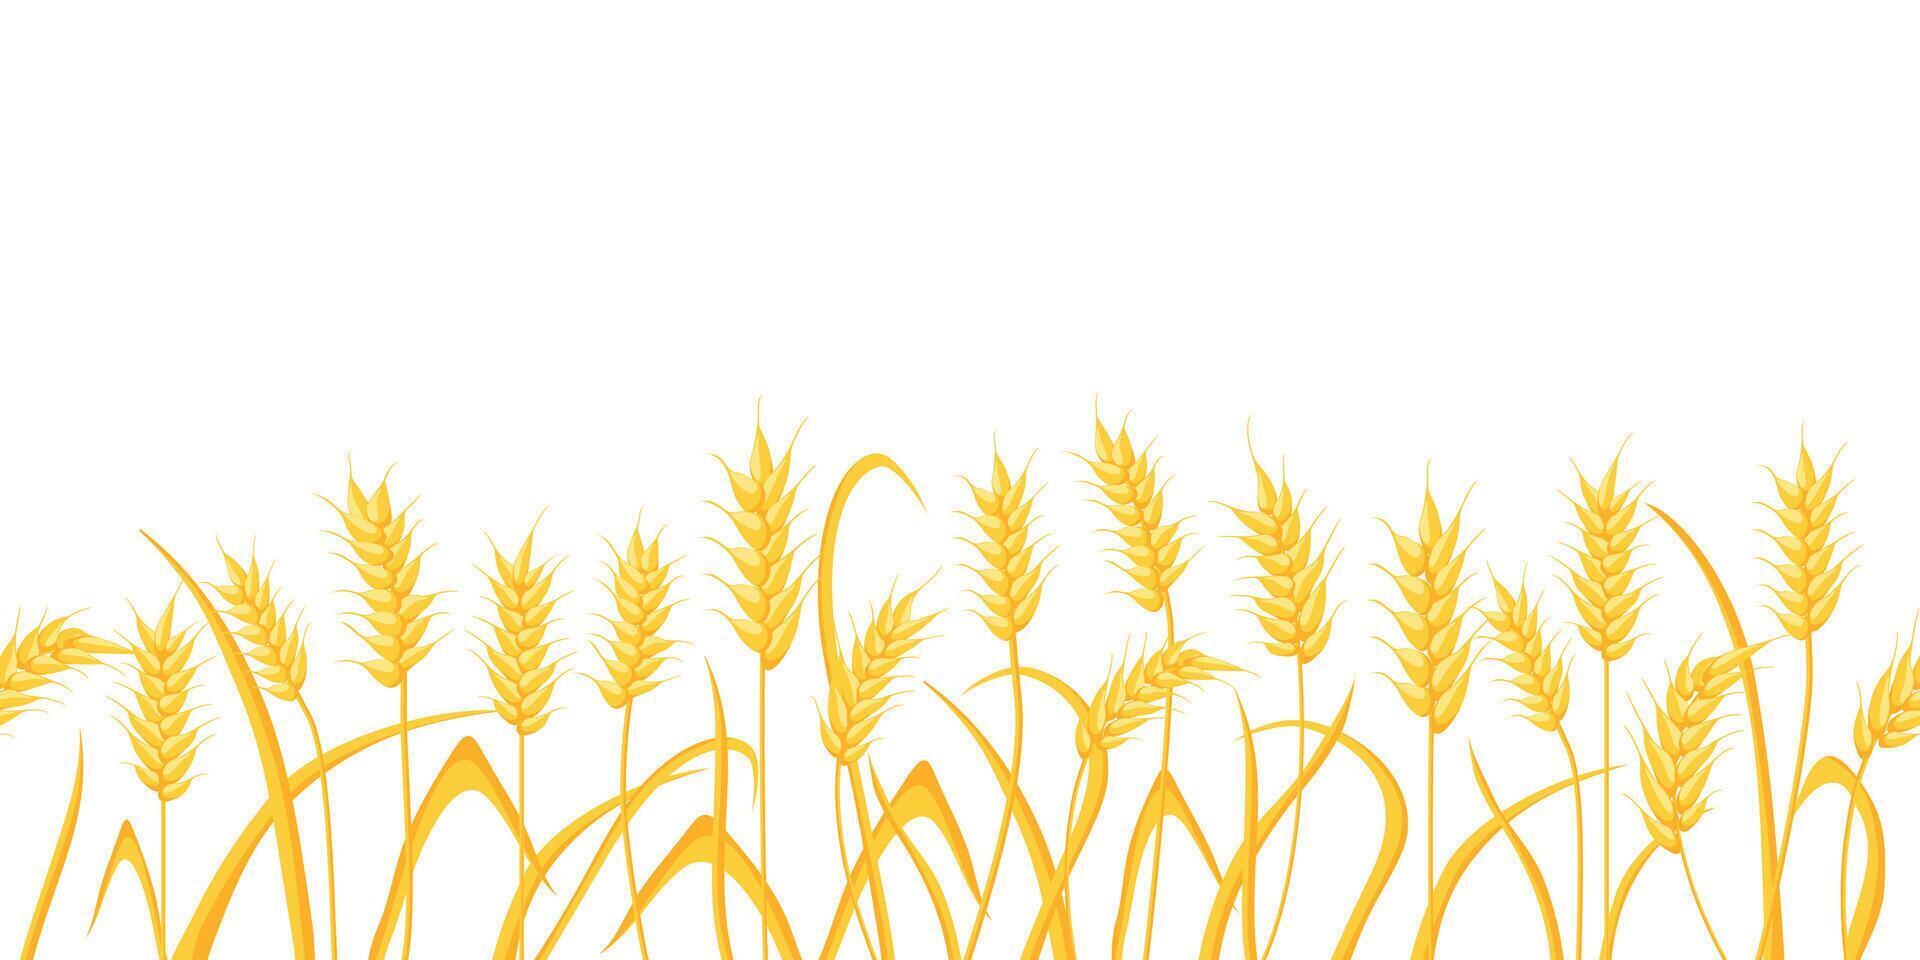 dibujos animados granja campo antecedentes con dorado trigo Picos. agricultura cereal cosecha orejas. rural escena con grano cosecha vector frontera modelo